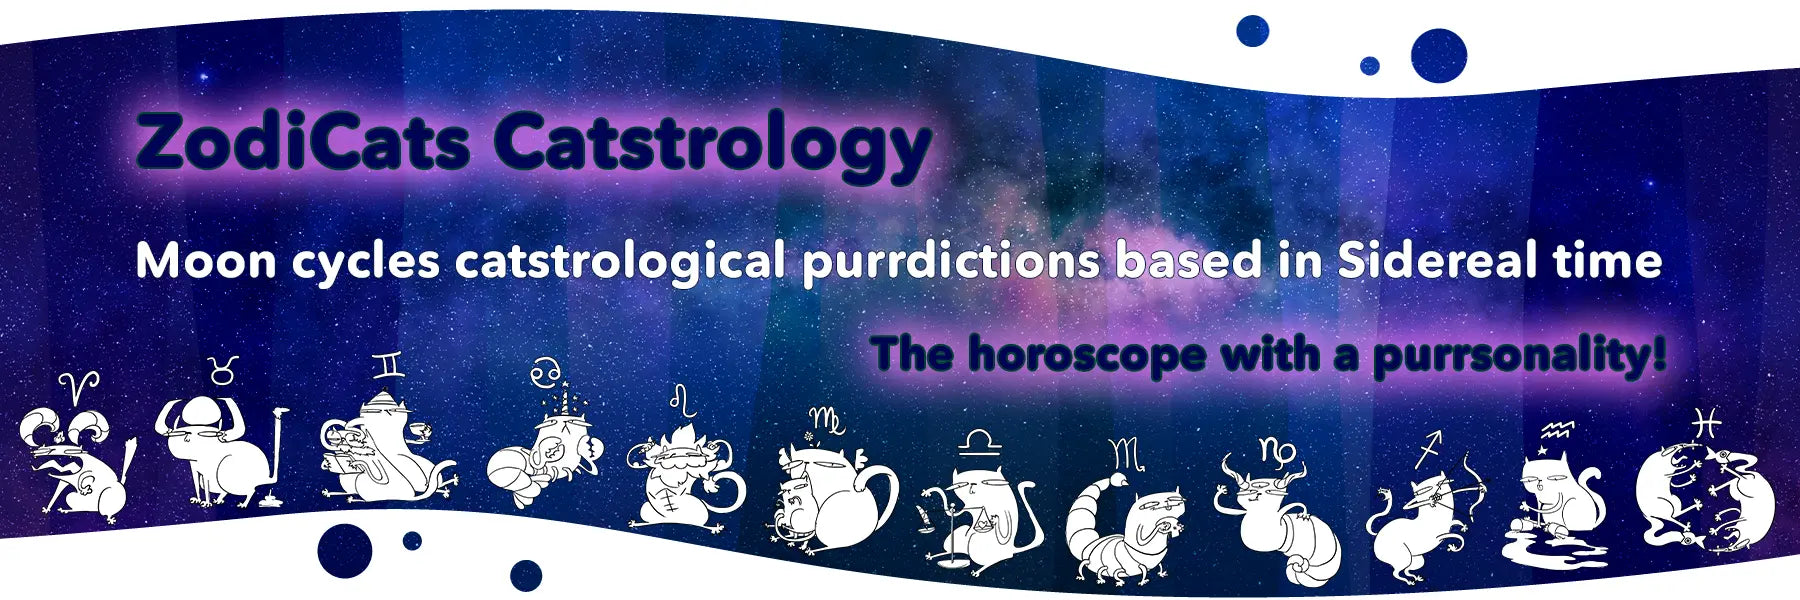 Zodicats horoscope purrdiction graphic image banner